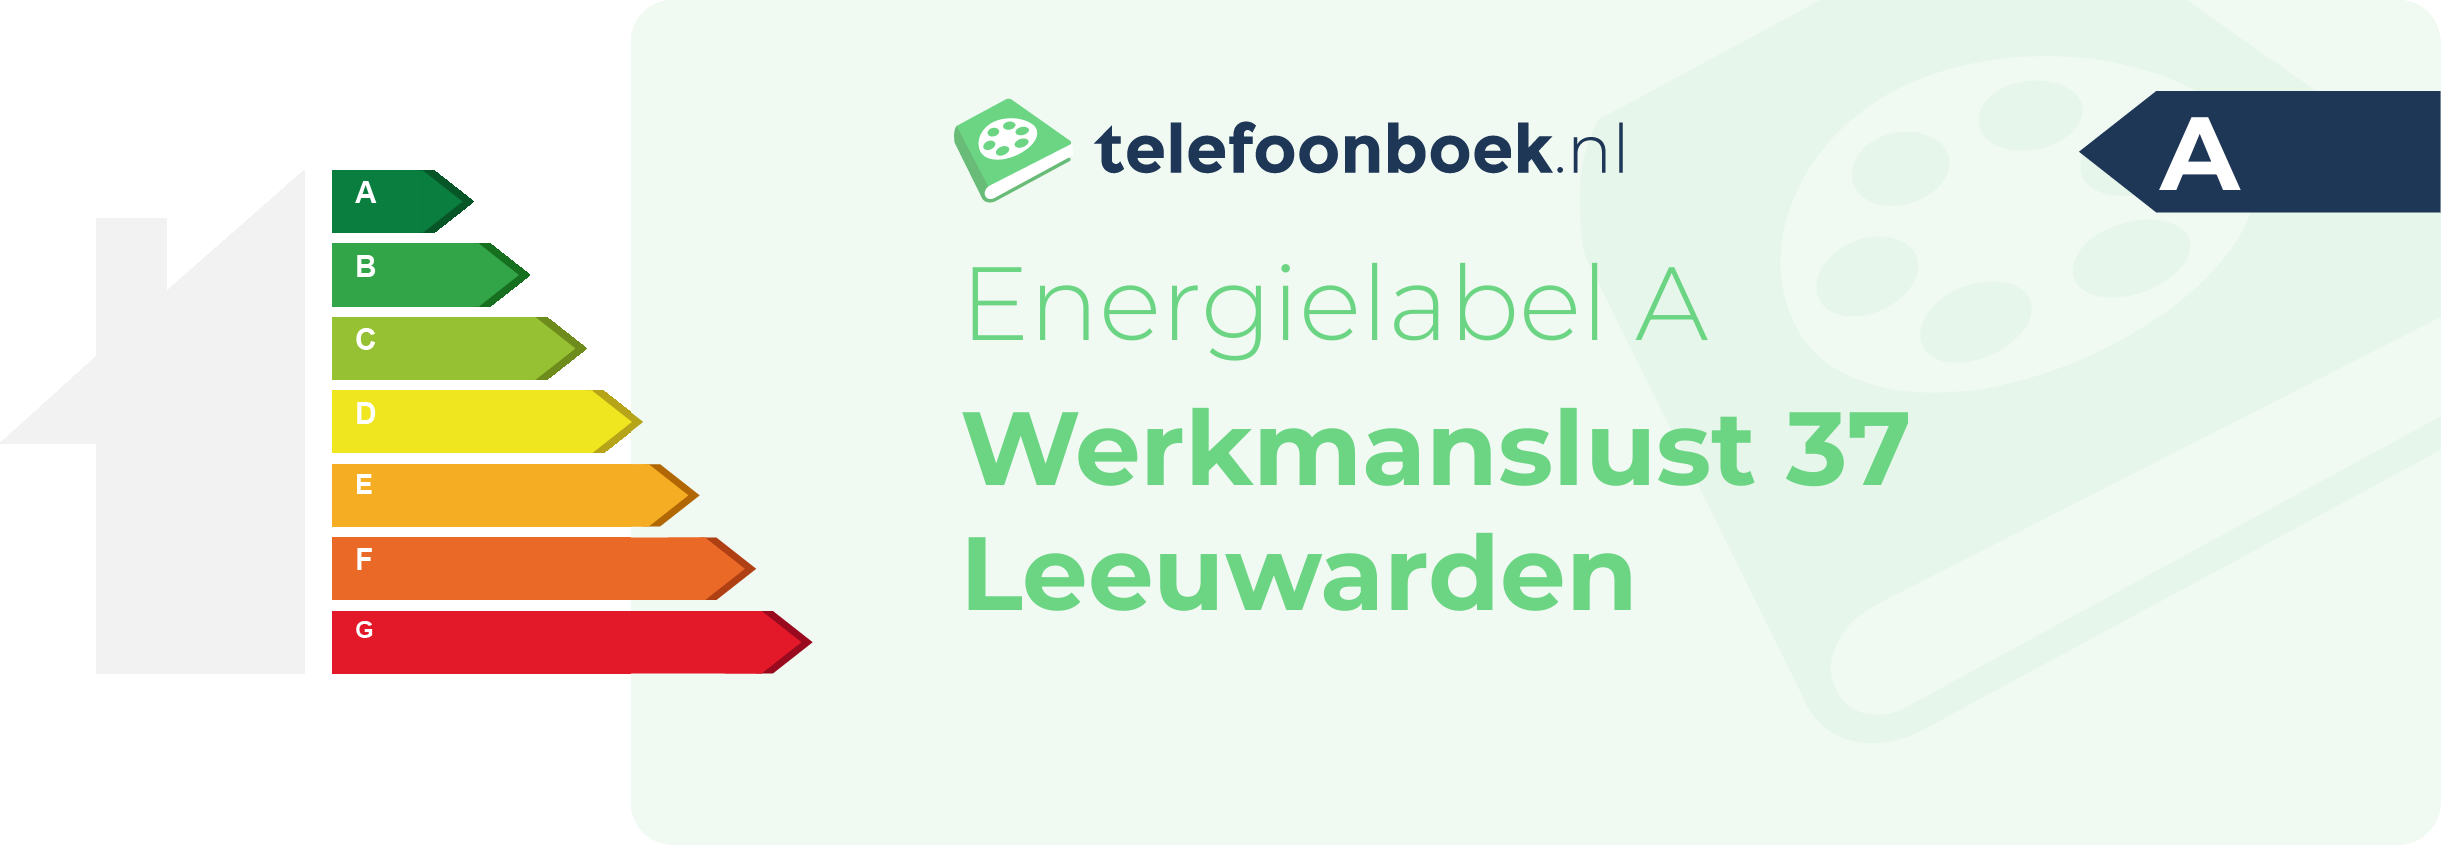 Energielabel Werkmanslust 37 Leeuwarden